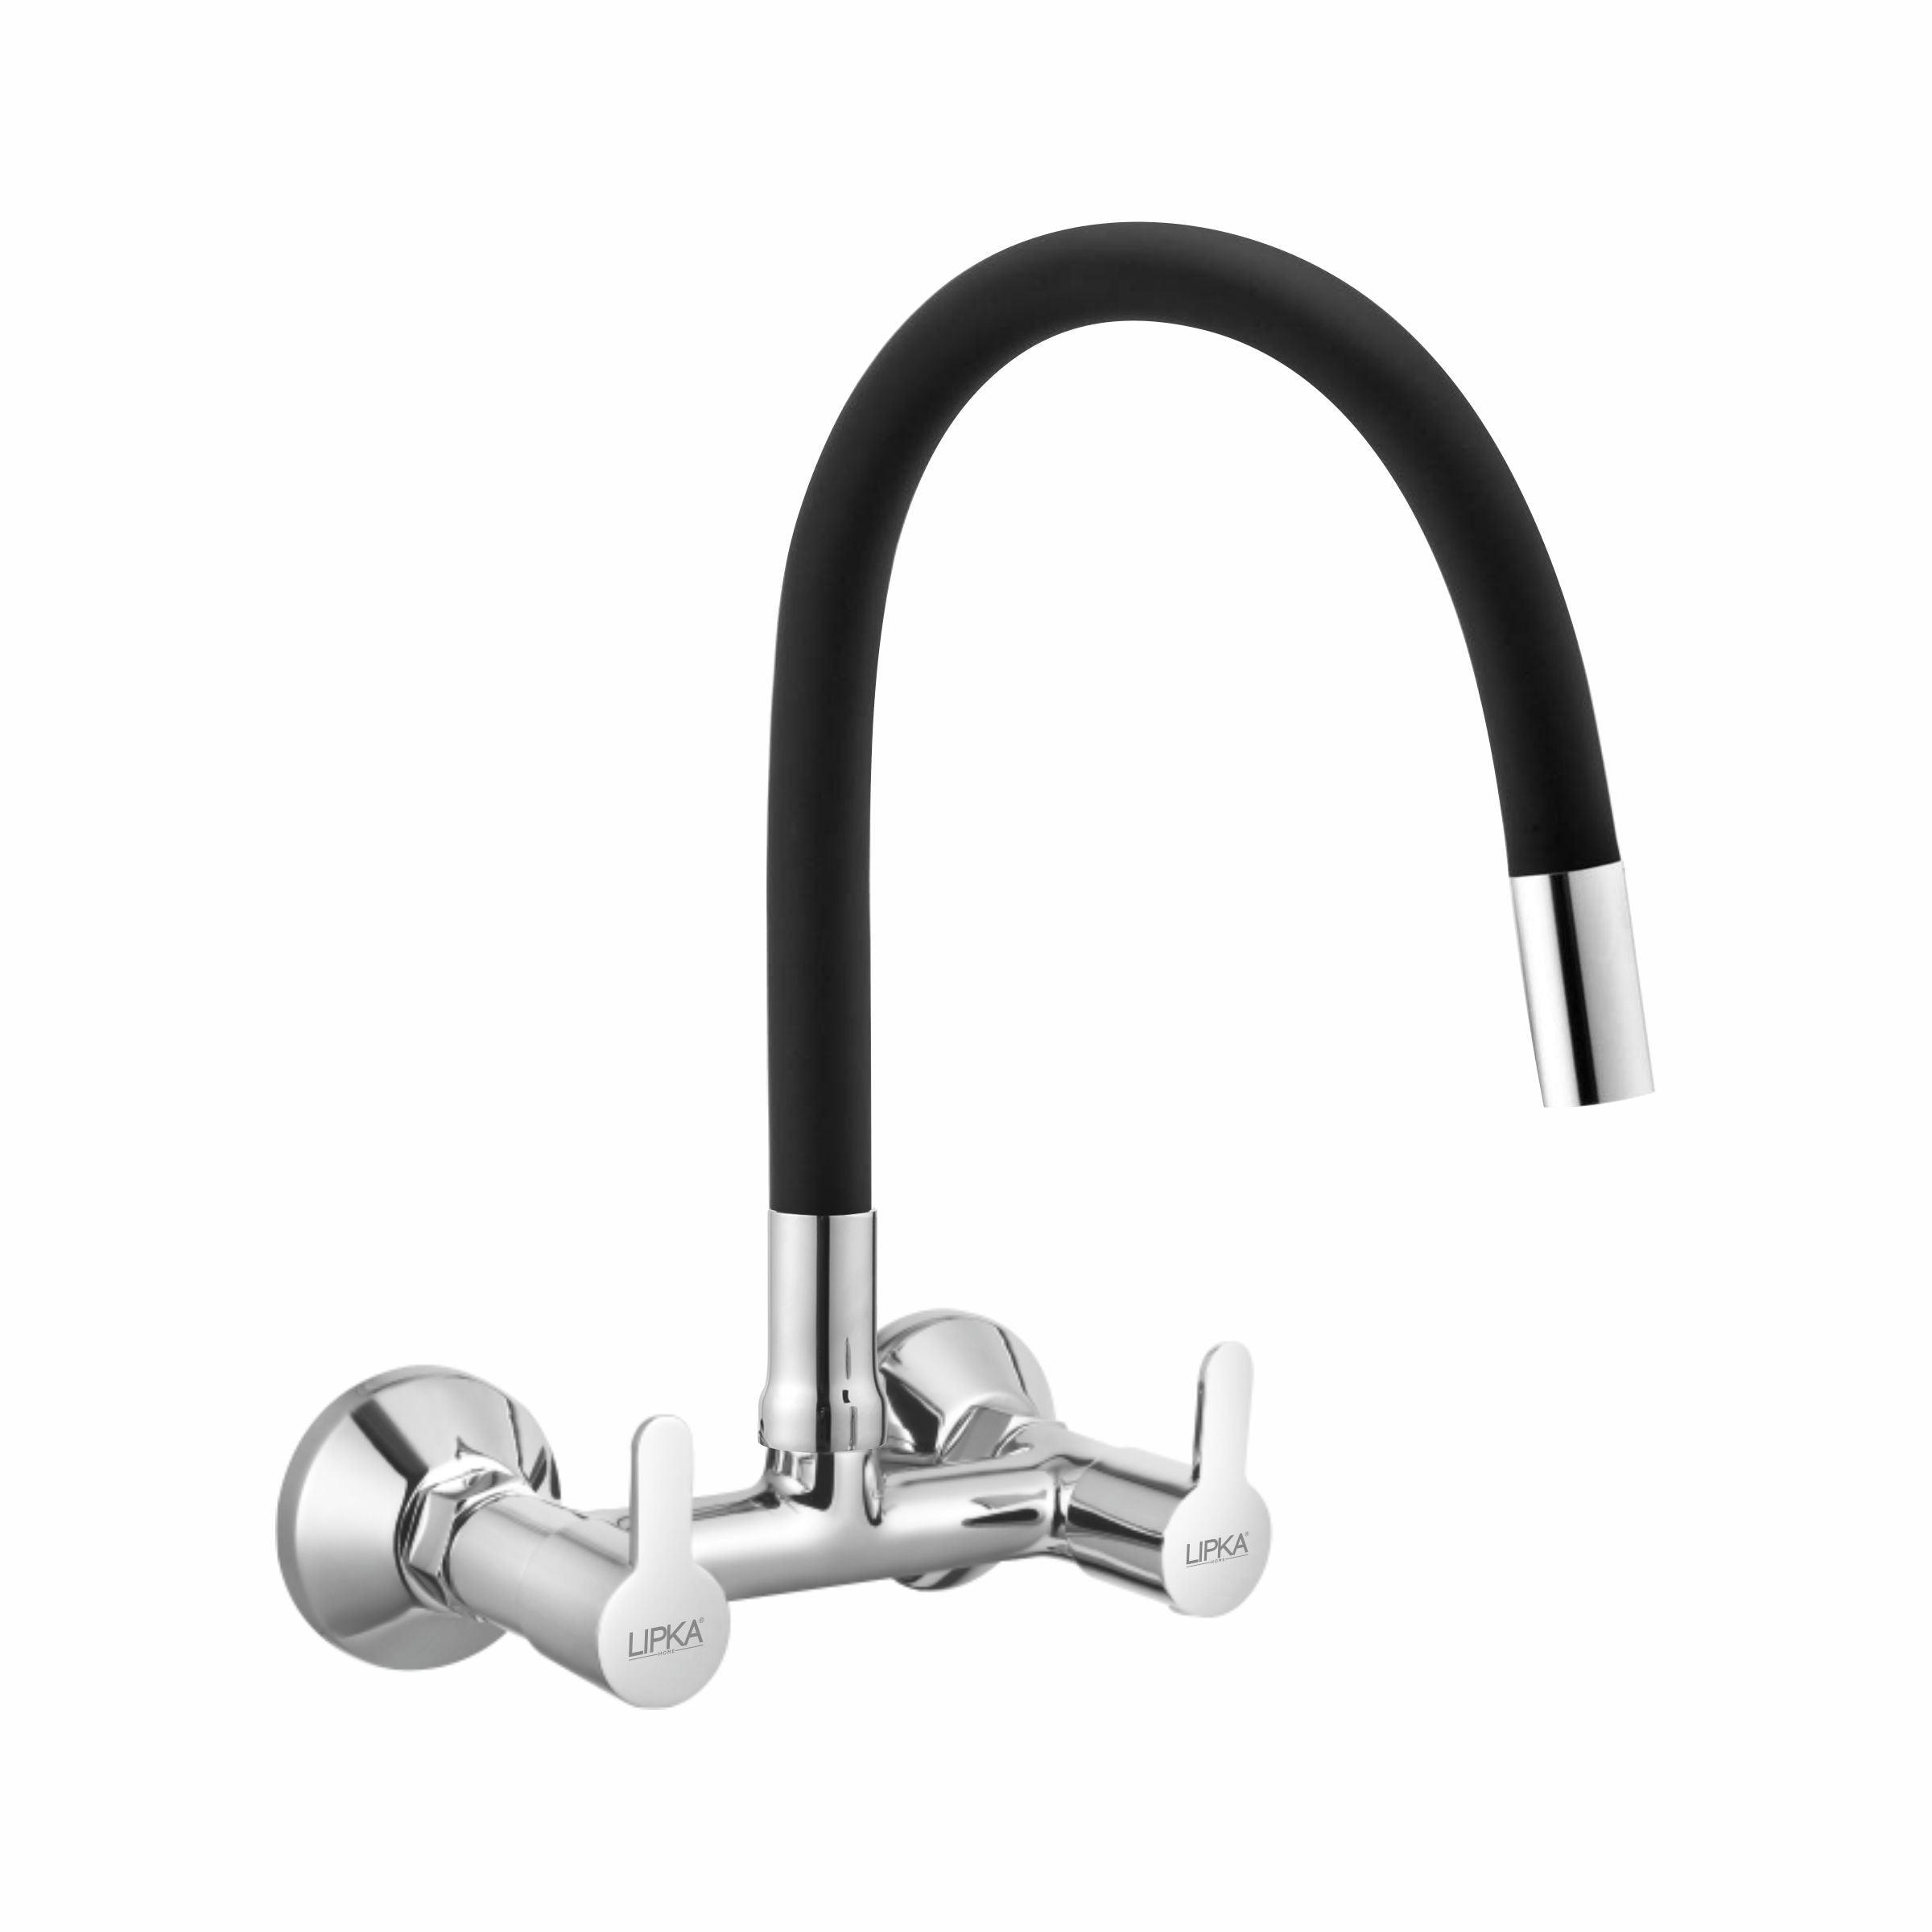 Fusion Sink Mixer Brass Faucet with Flexible Silicone Spout (Black) - LIPKA - Lipka Home